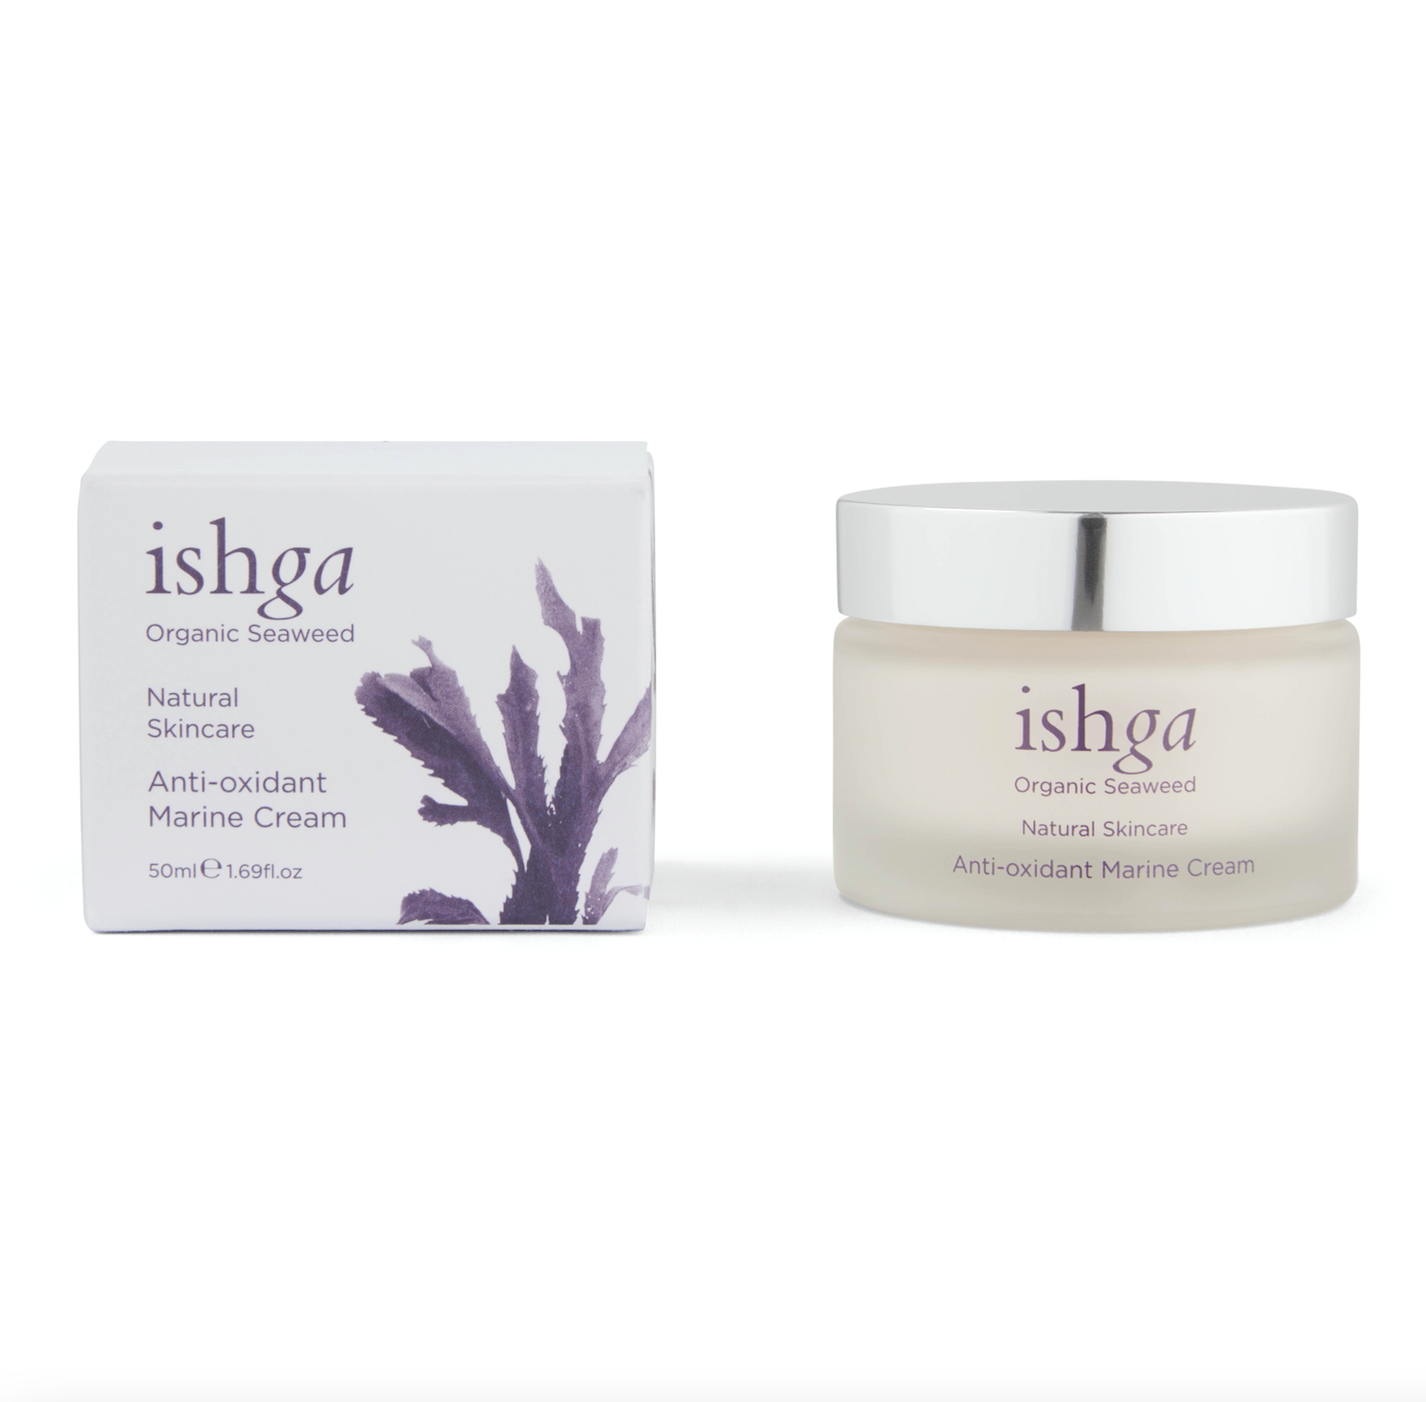 Jar of award winning ishga Anti-oxidant Marine Cream moisturiser for the face